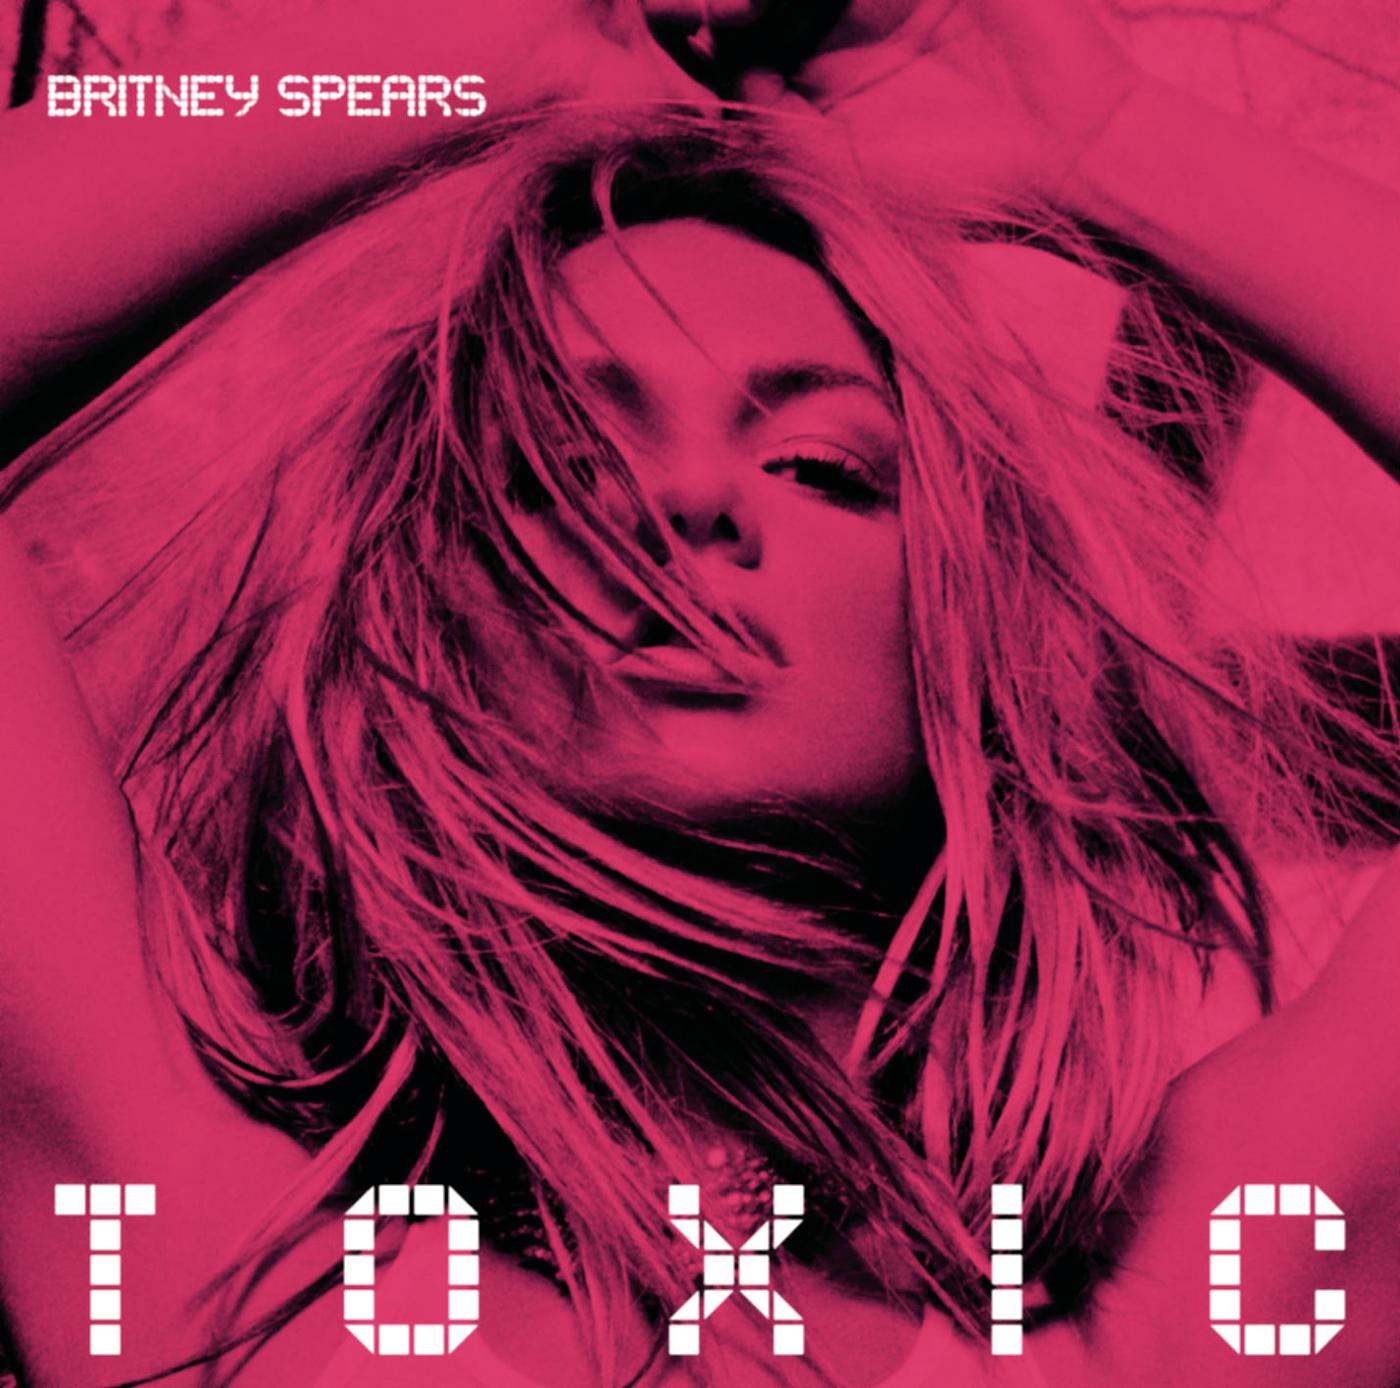 Toxic Бритни Спирс обложка. Britney Spears Toxic 2004. Бритни Спирс Токсик. Бритни Спирс обложка. Песня токсик бритни